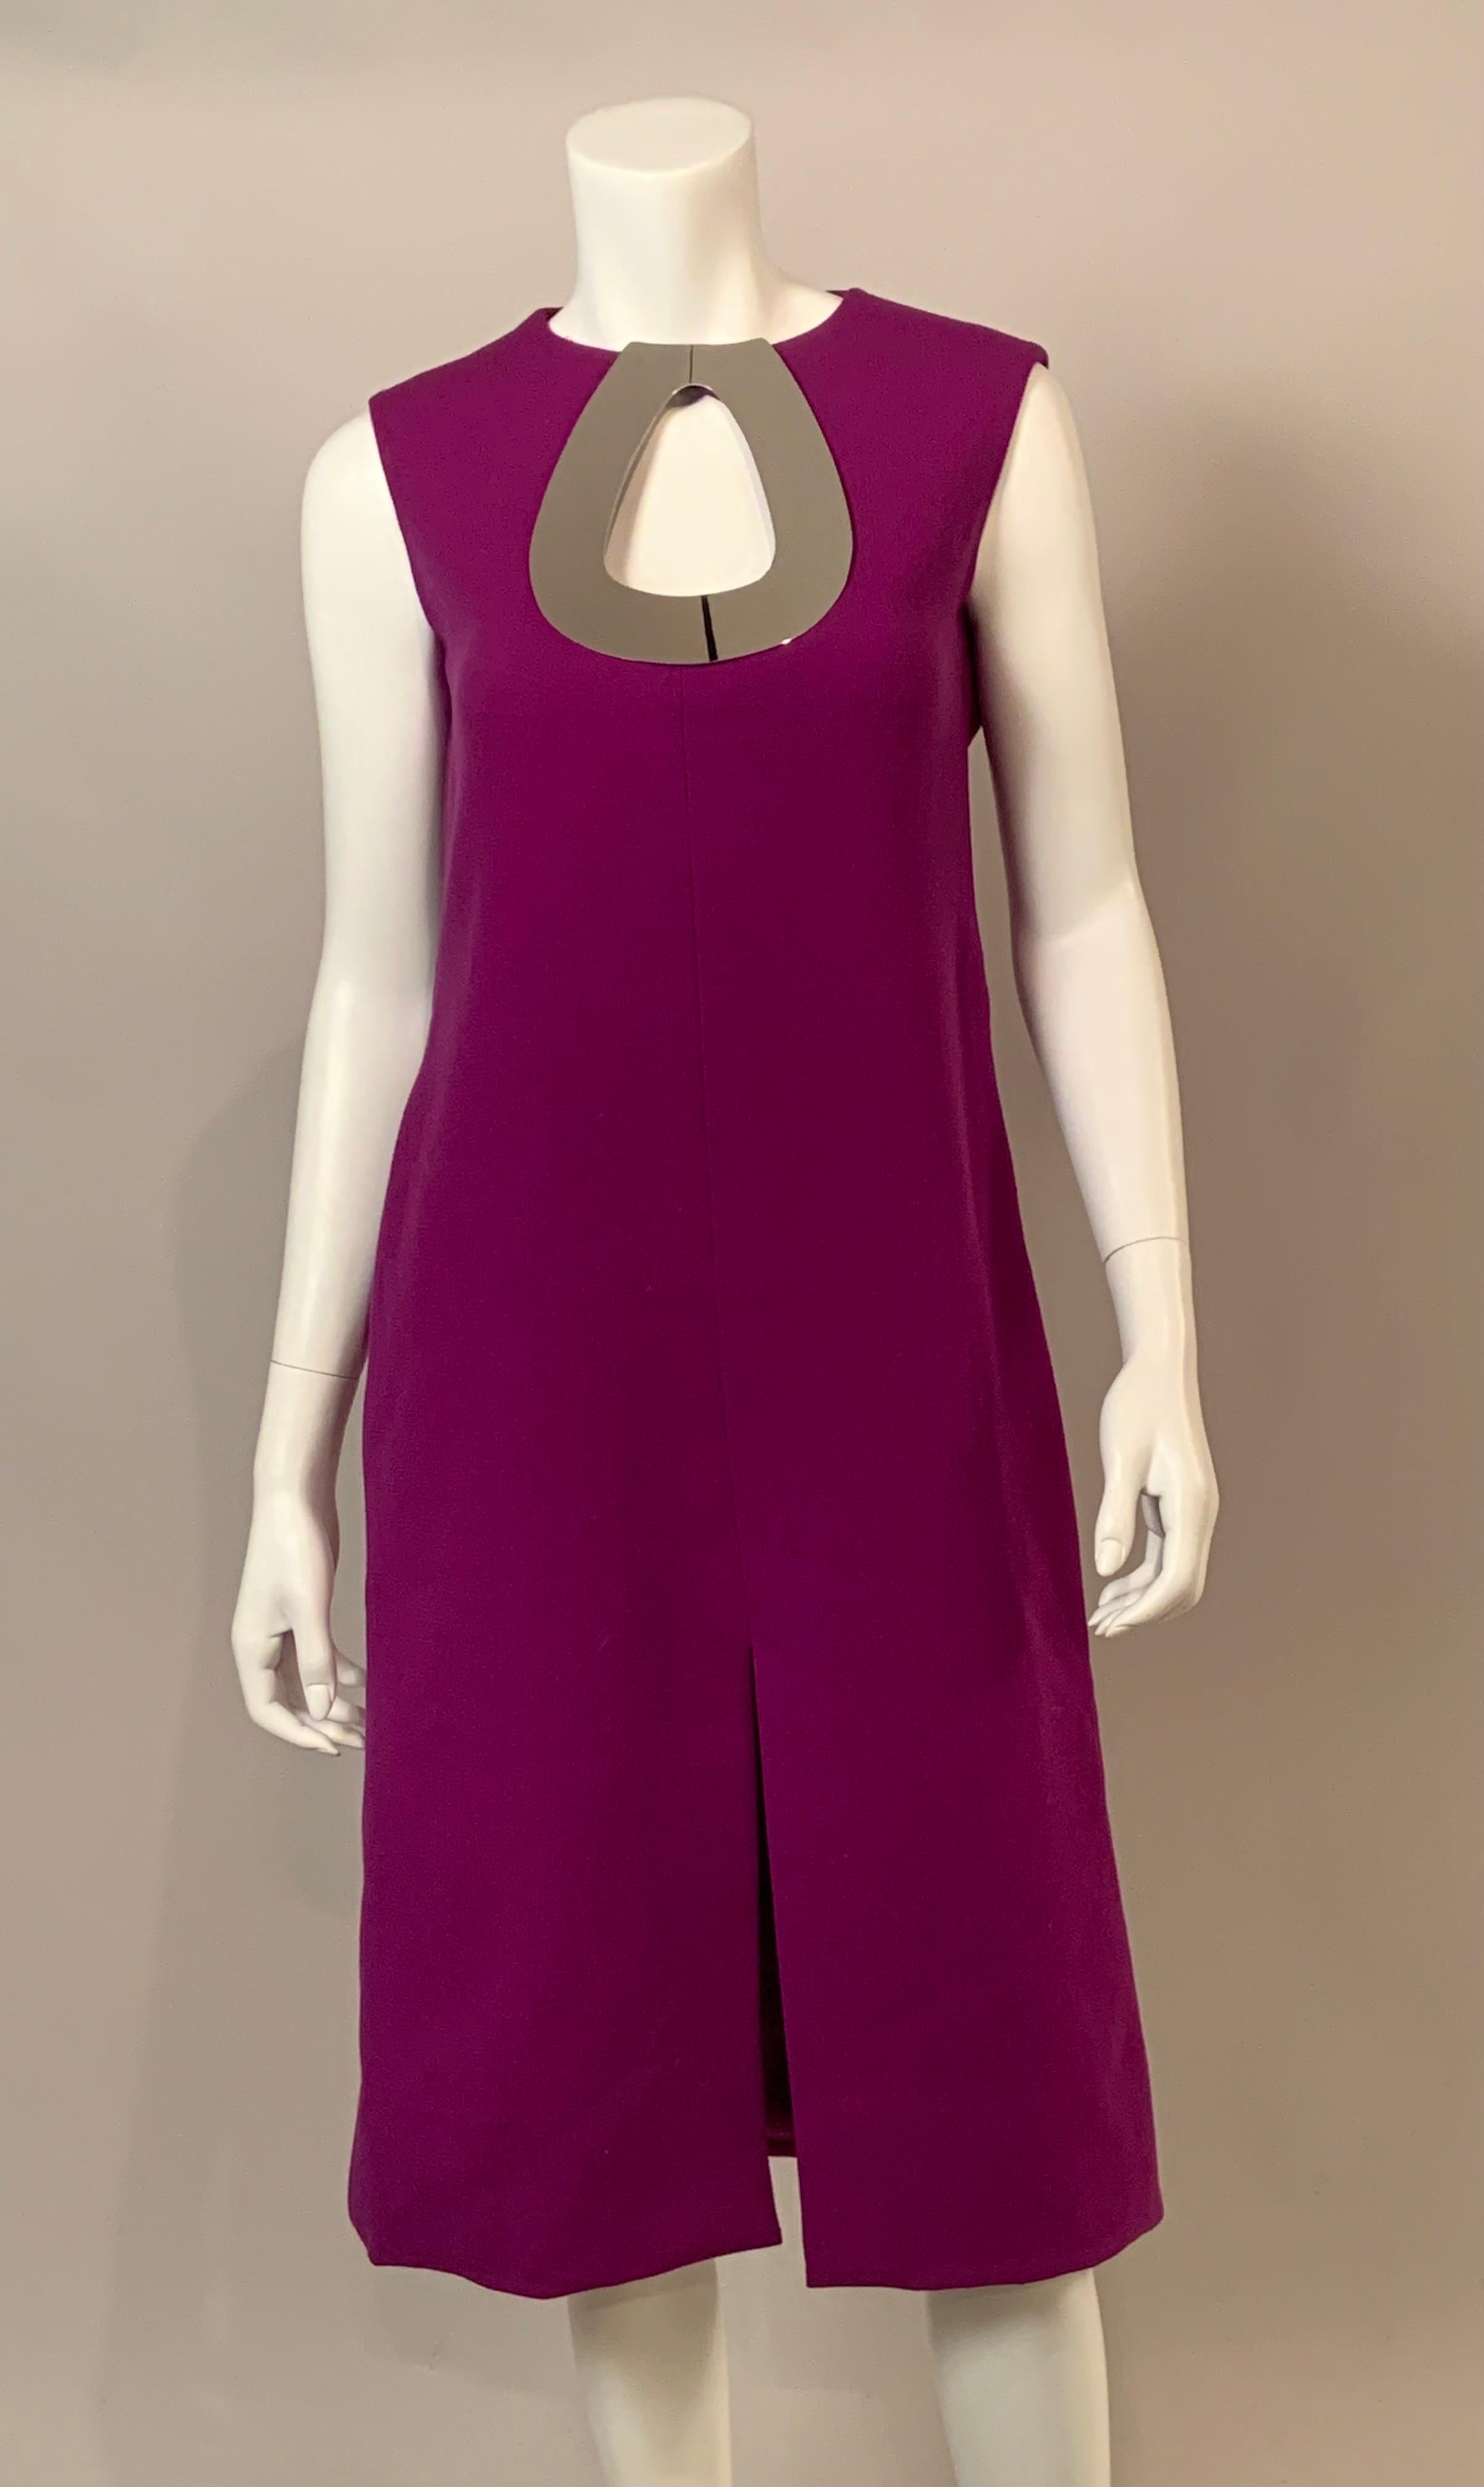 Women's 1960's Pierre Cardin Purple Dress with Chrome Keyhole Neckline For Sale